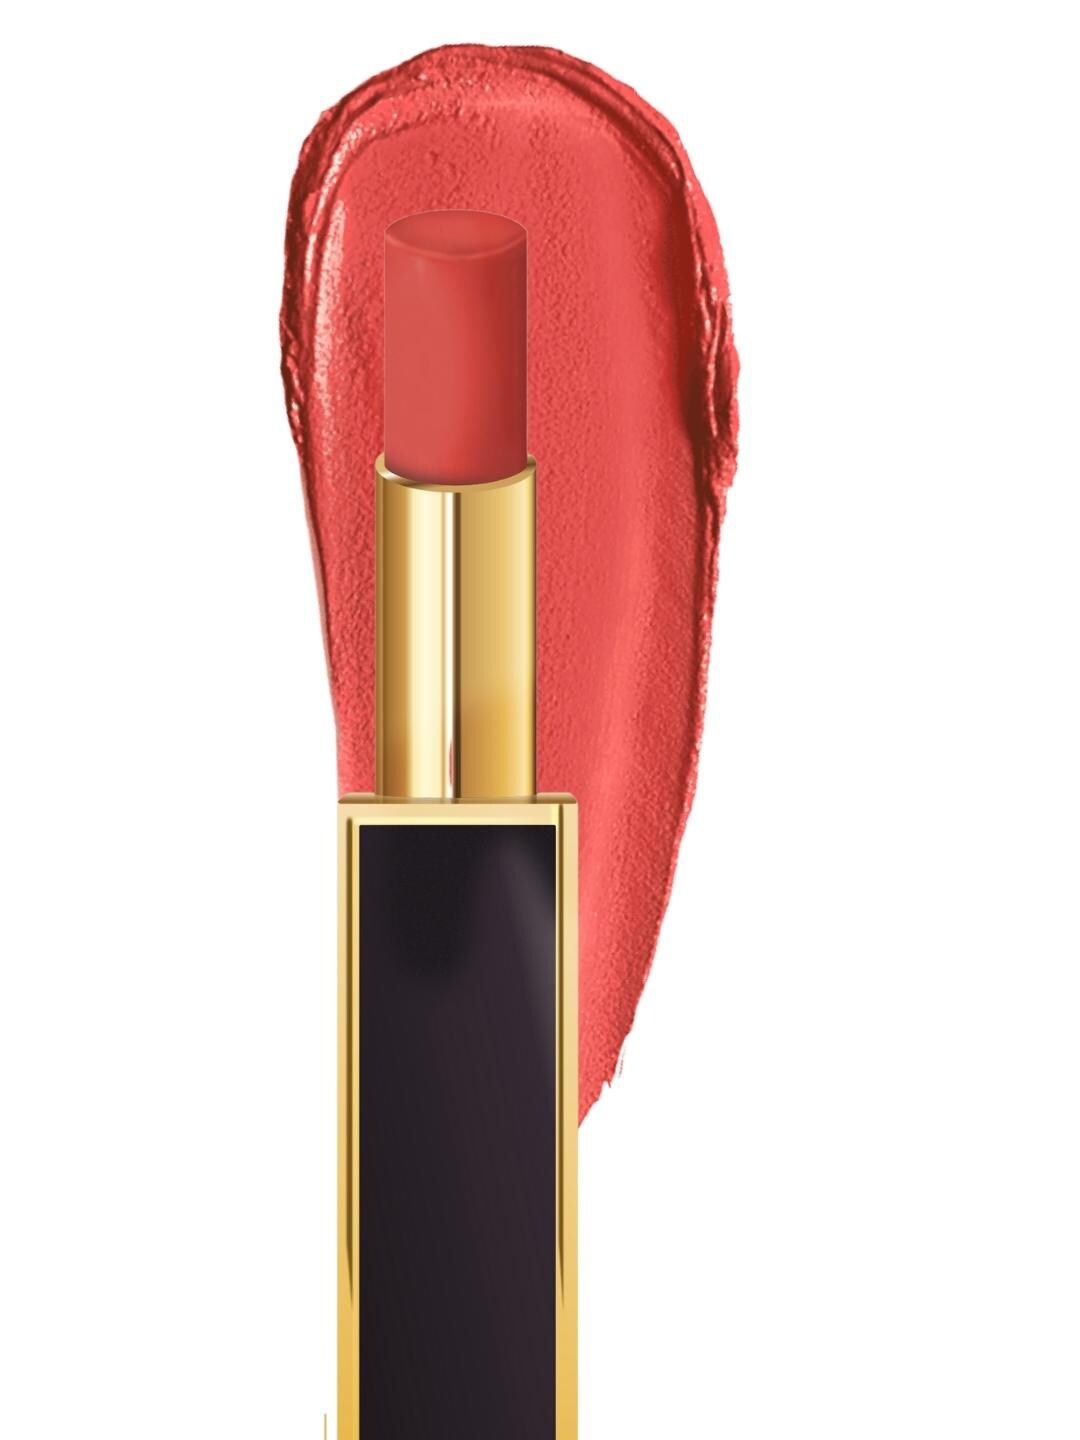 CAL Losangeles Iconic Collection Lipstick - Kashmir Saffron Price in India